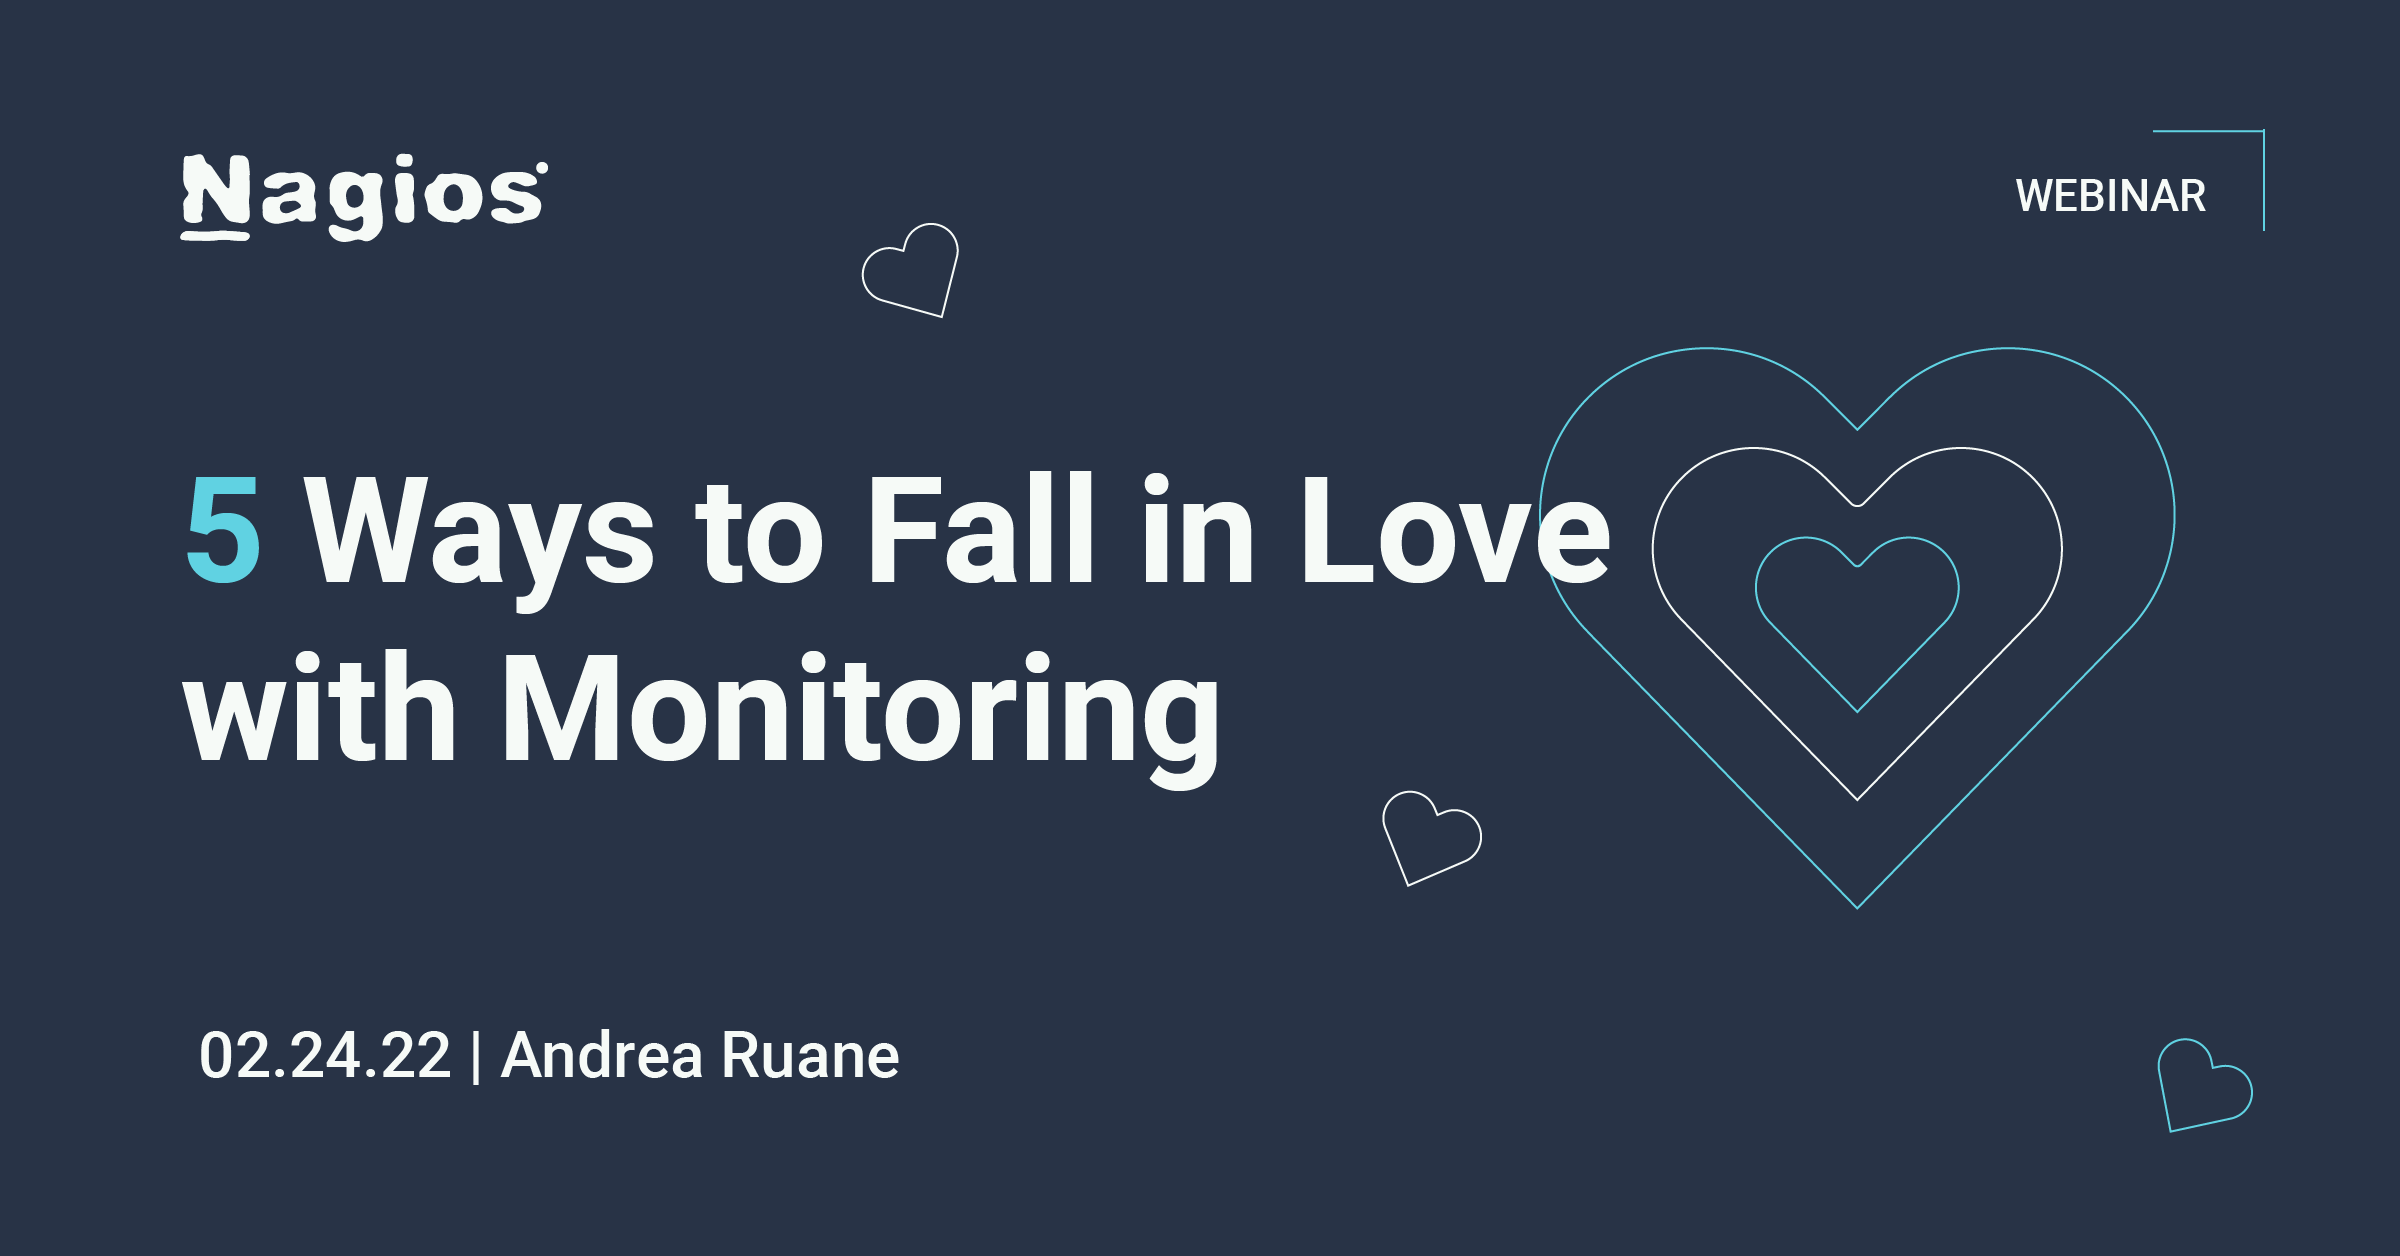 nagios webinar: 5 ways to fall in love with monitoring